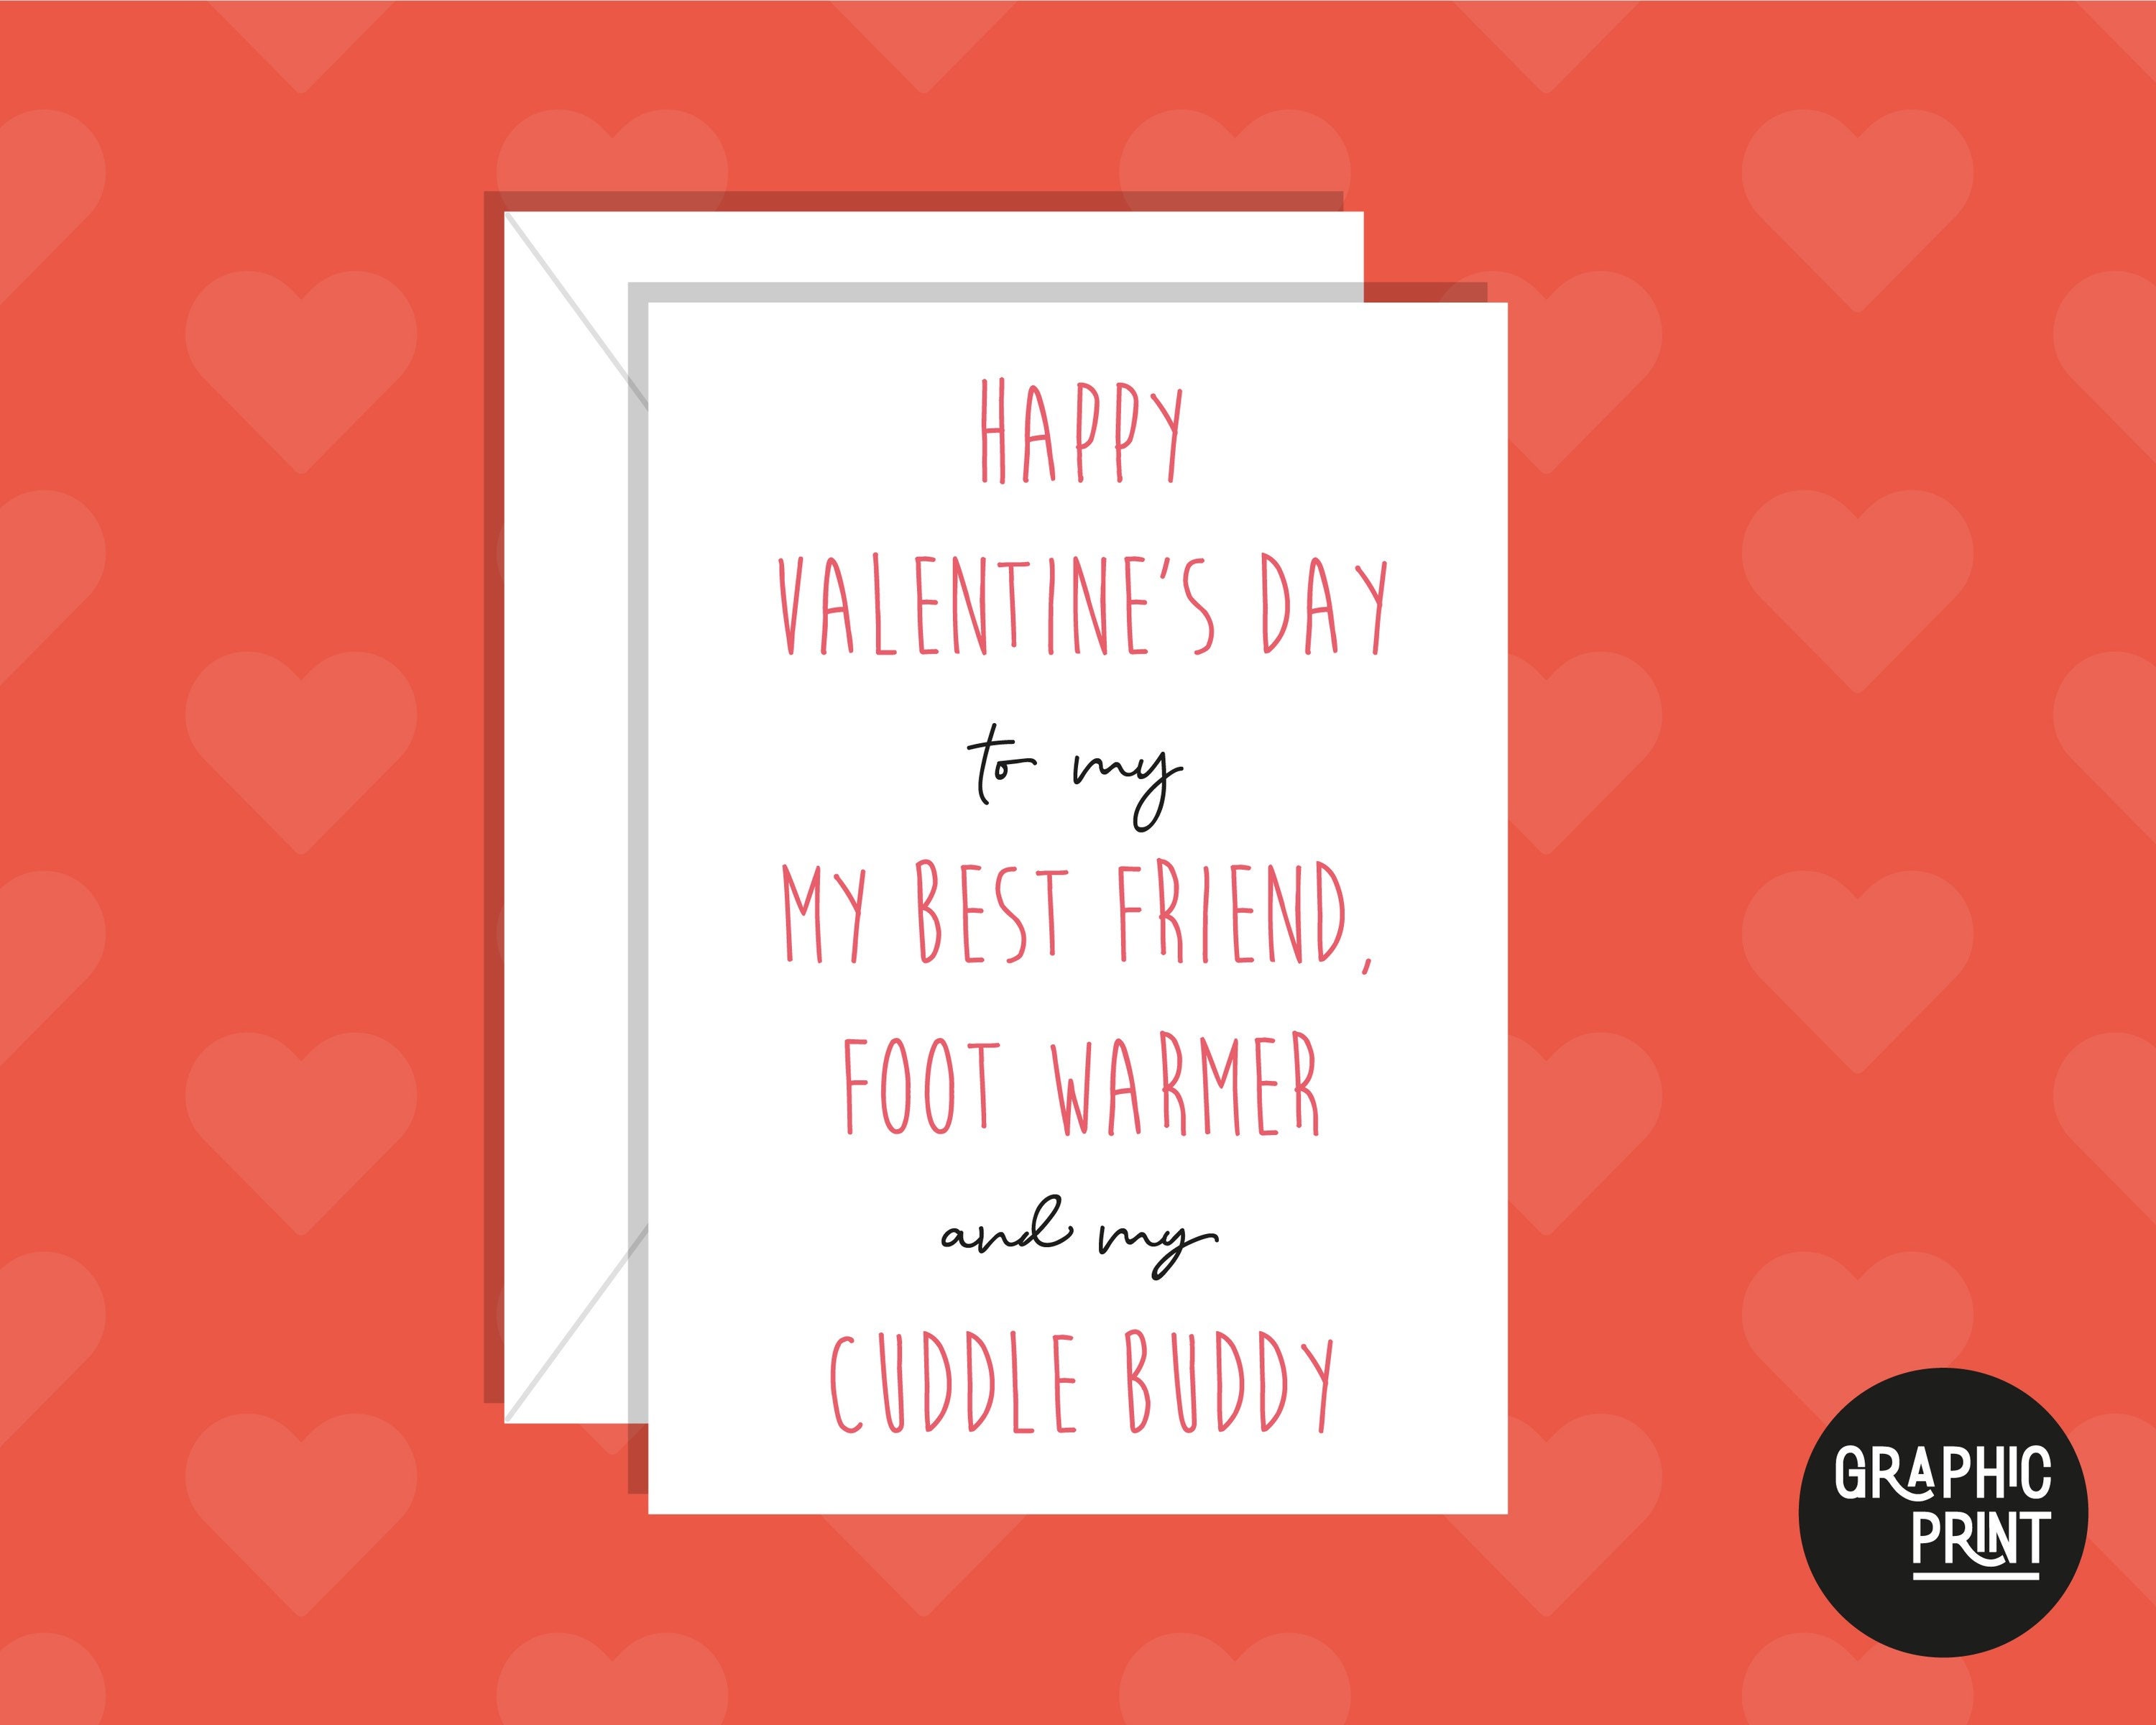 Happy Valentine’s Day To My Best Friend, Foot Warmer, Cuddle Buddy Card,  Cute Valentine’s Card Boyfriend/Girlfriend, Cute Anniversary Card